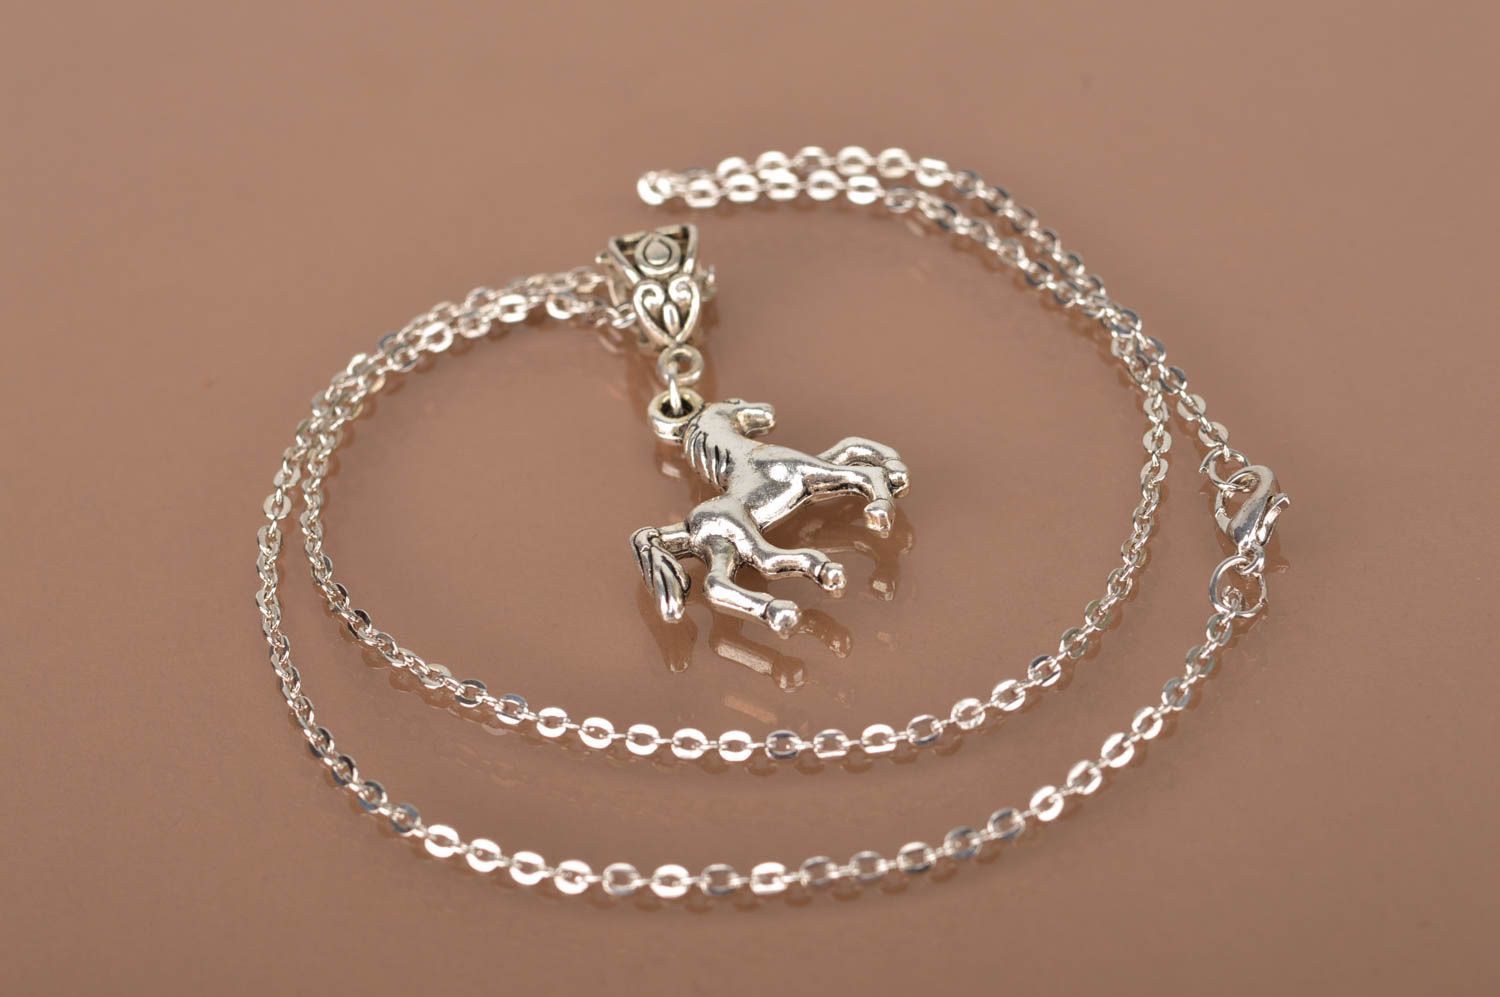 Unusual handmade metal pendant horse designer accessories for girls gift ideas photo 2